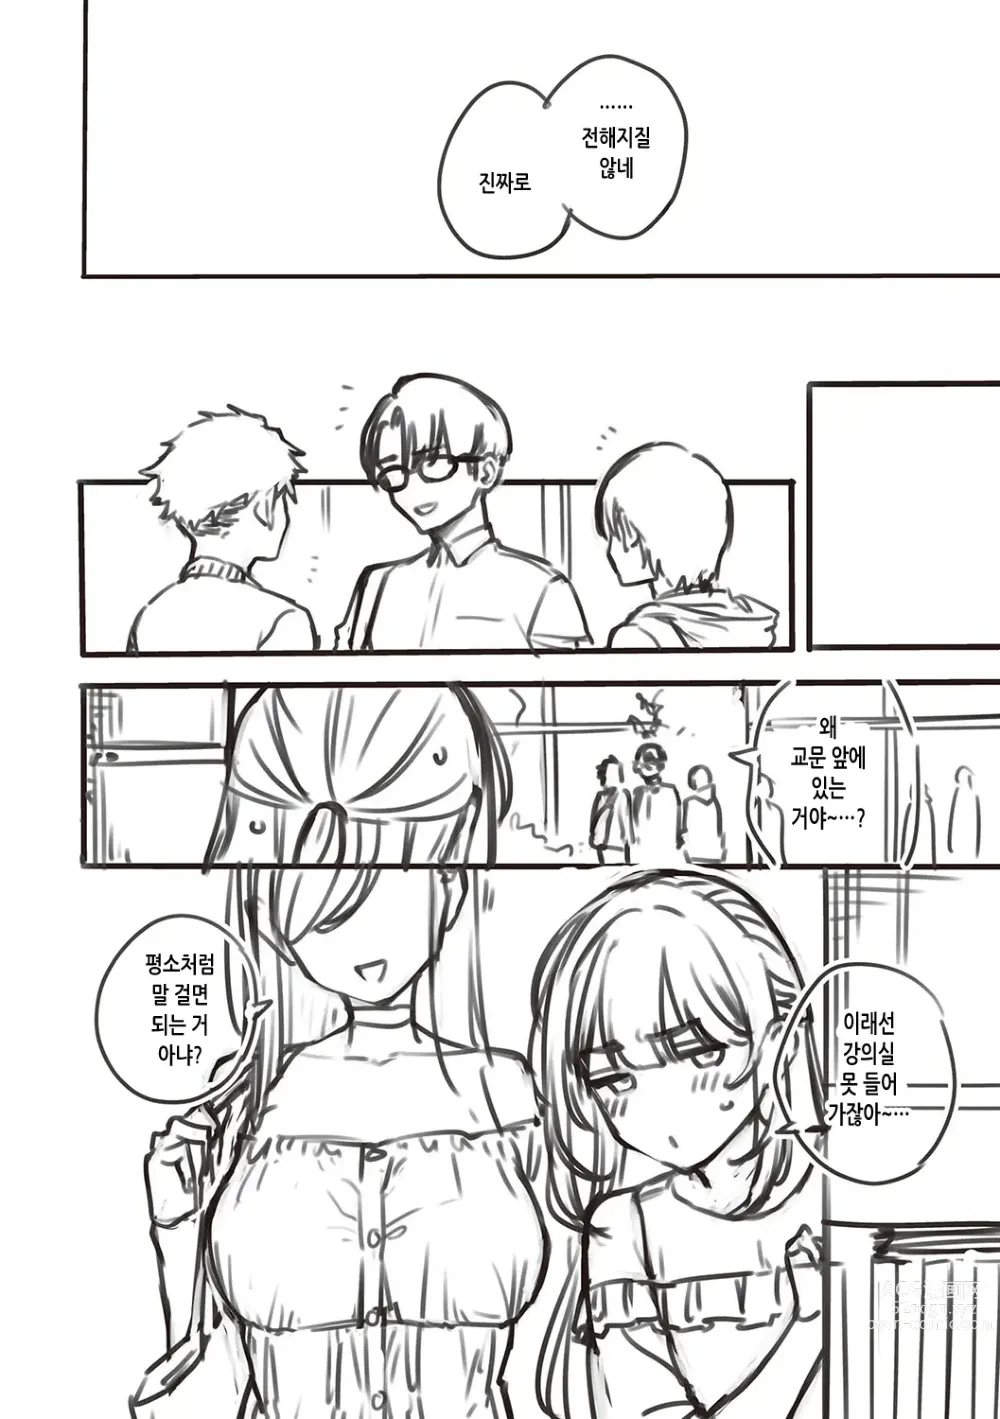 Page 269 of manga 비터스위트 콤플렉스